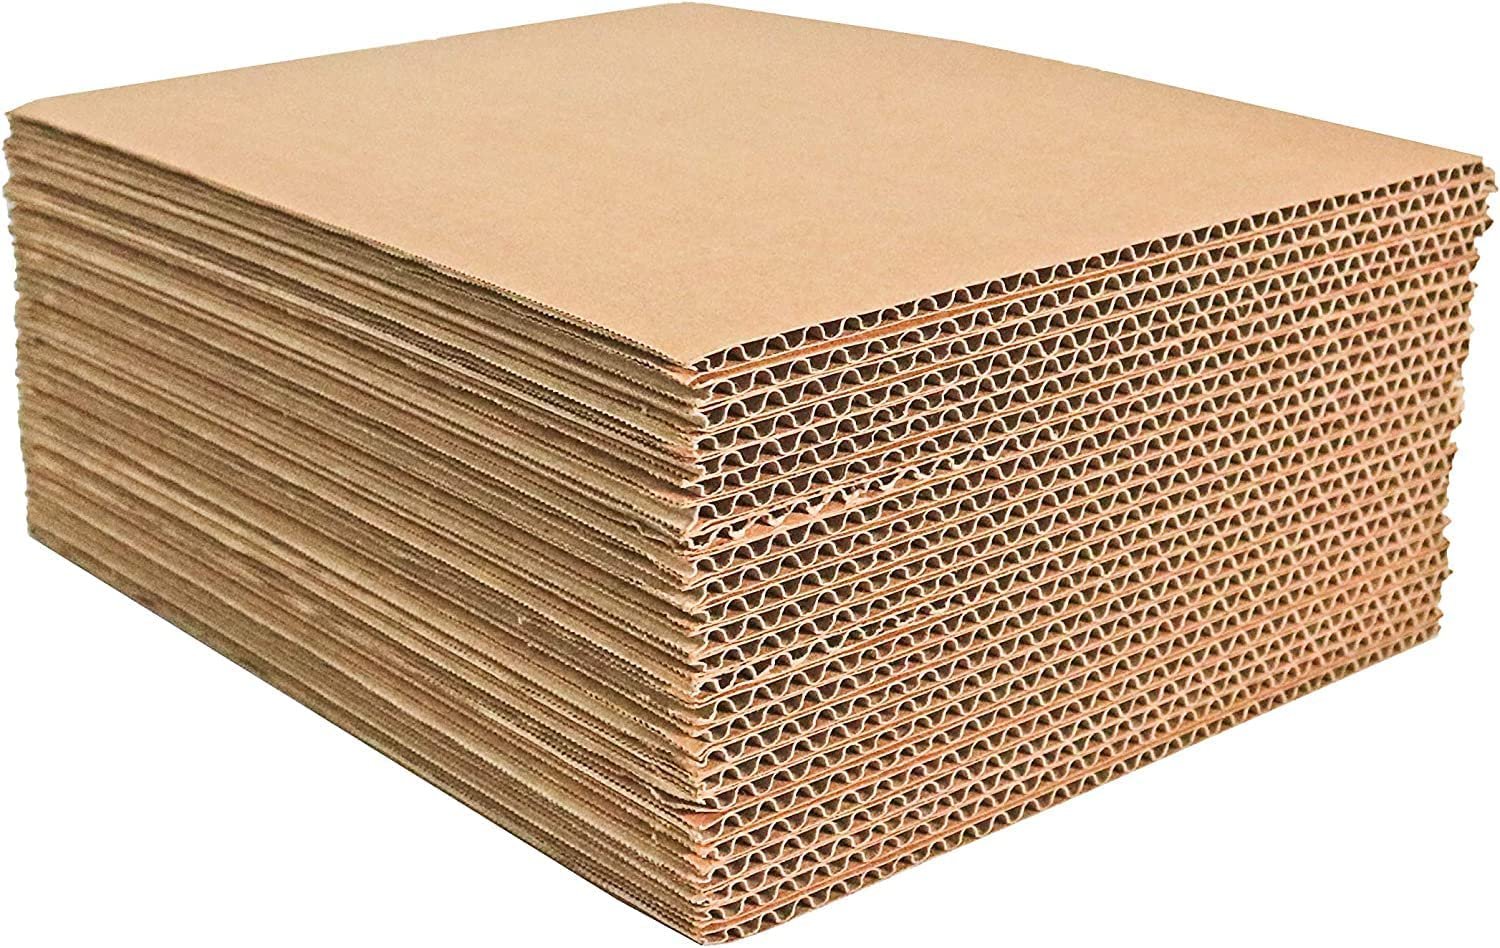 Corrugated Cardboard, Cardboard Sheets & Corrugated Sheets in